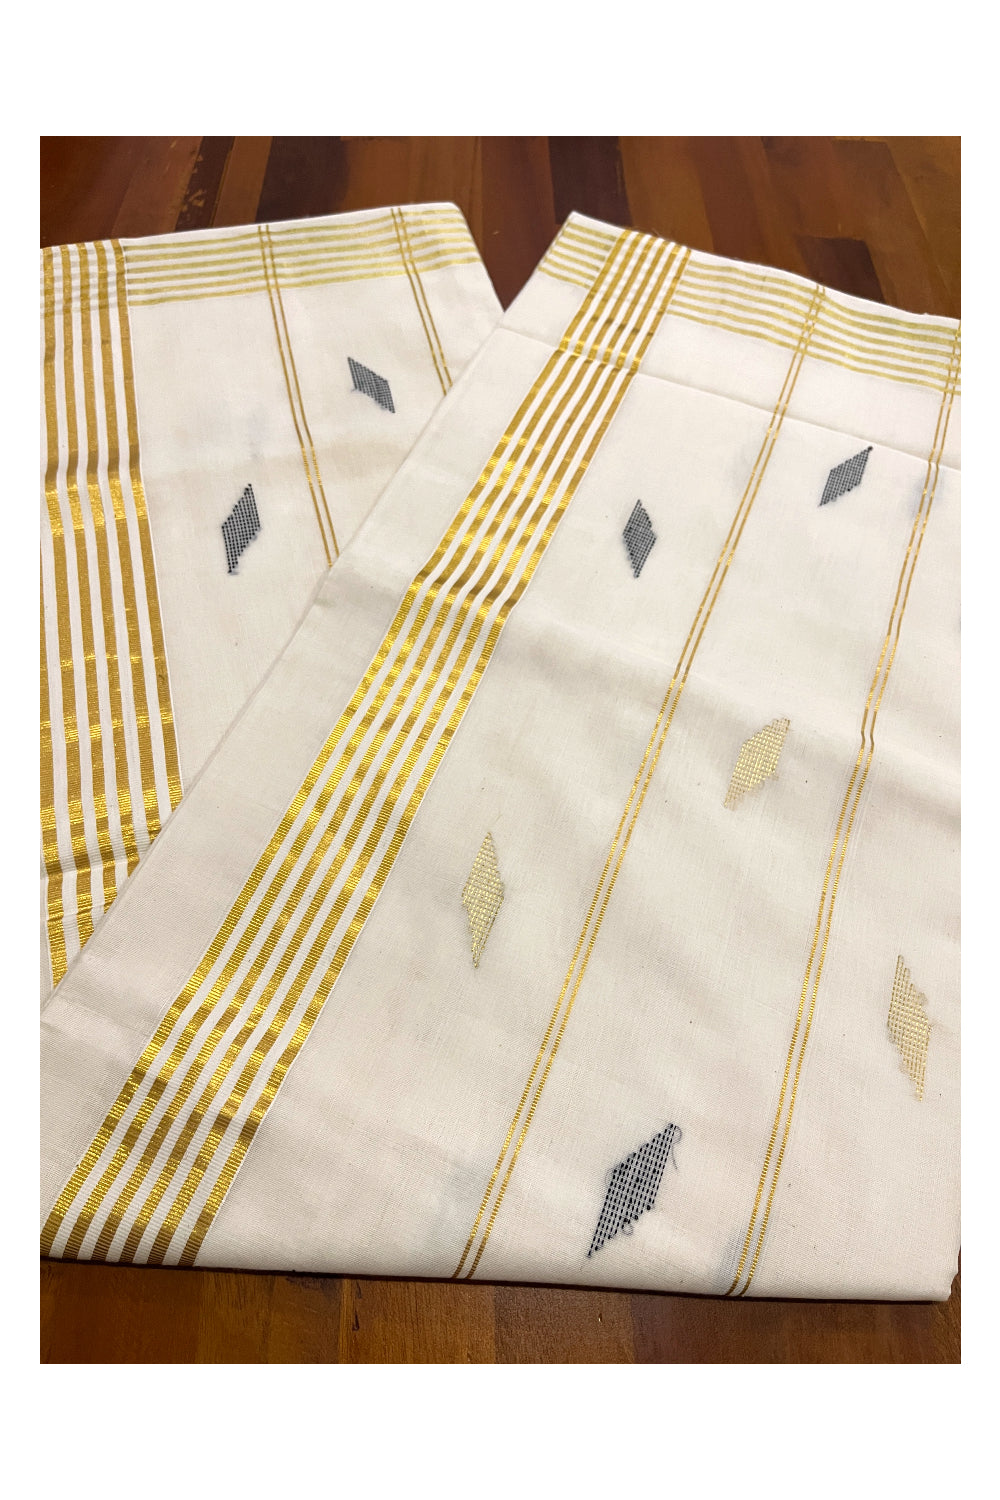 Southloom Premium Handloom Cotton Kerala Saree with Golden and Black Butta Works